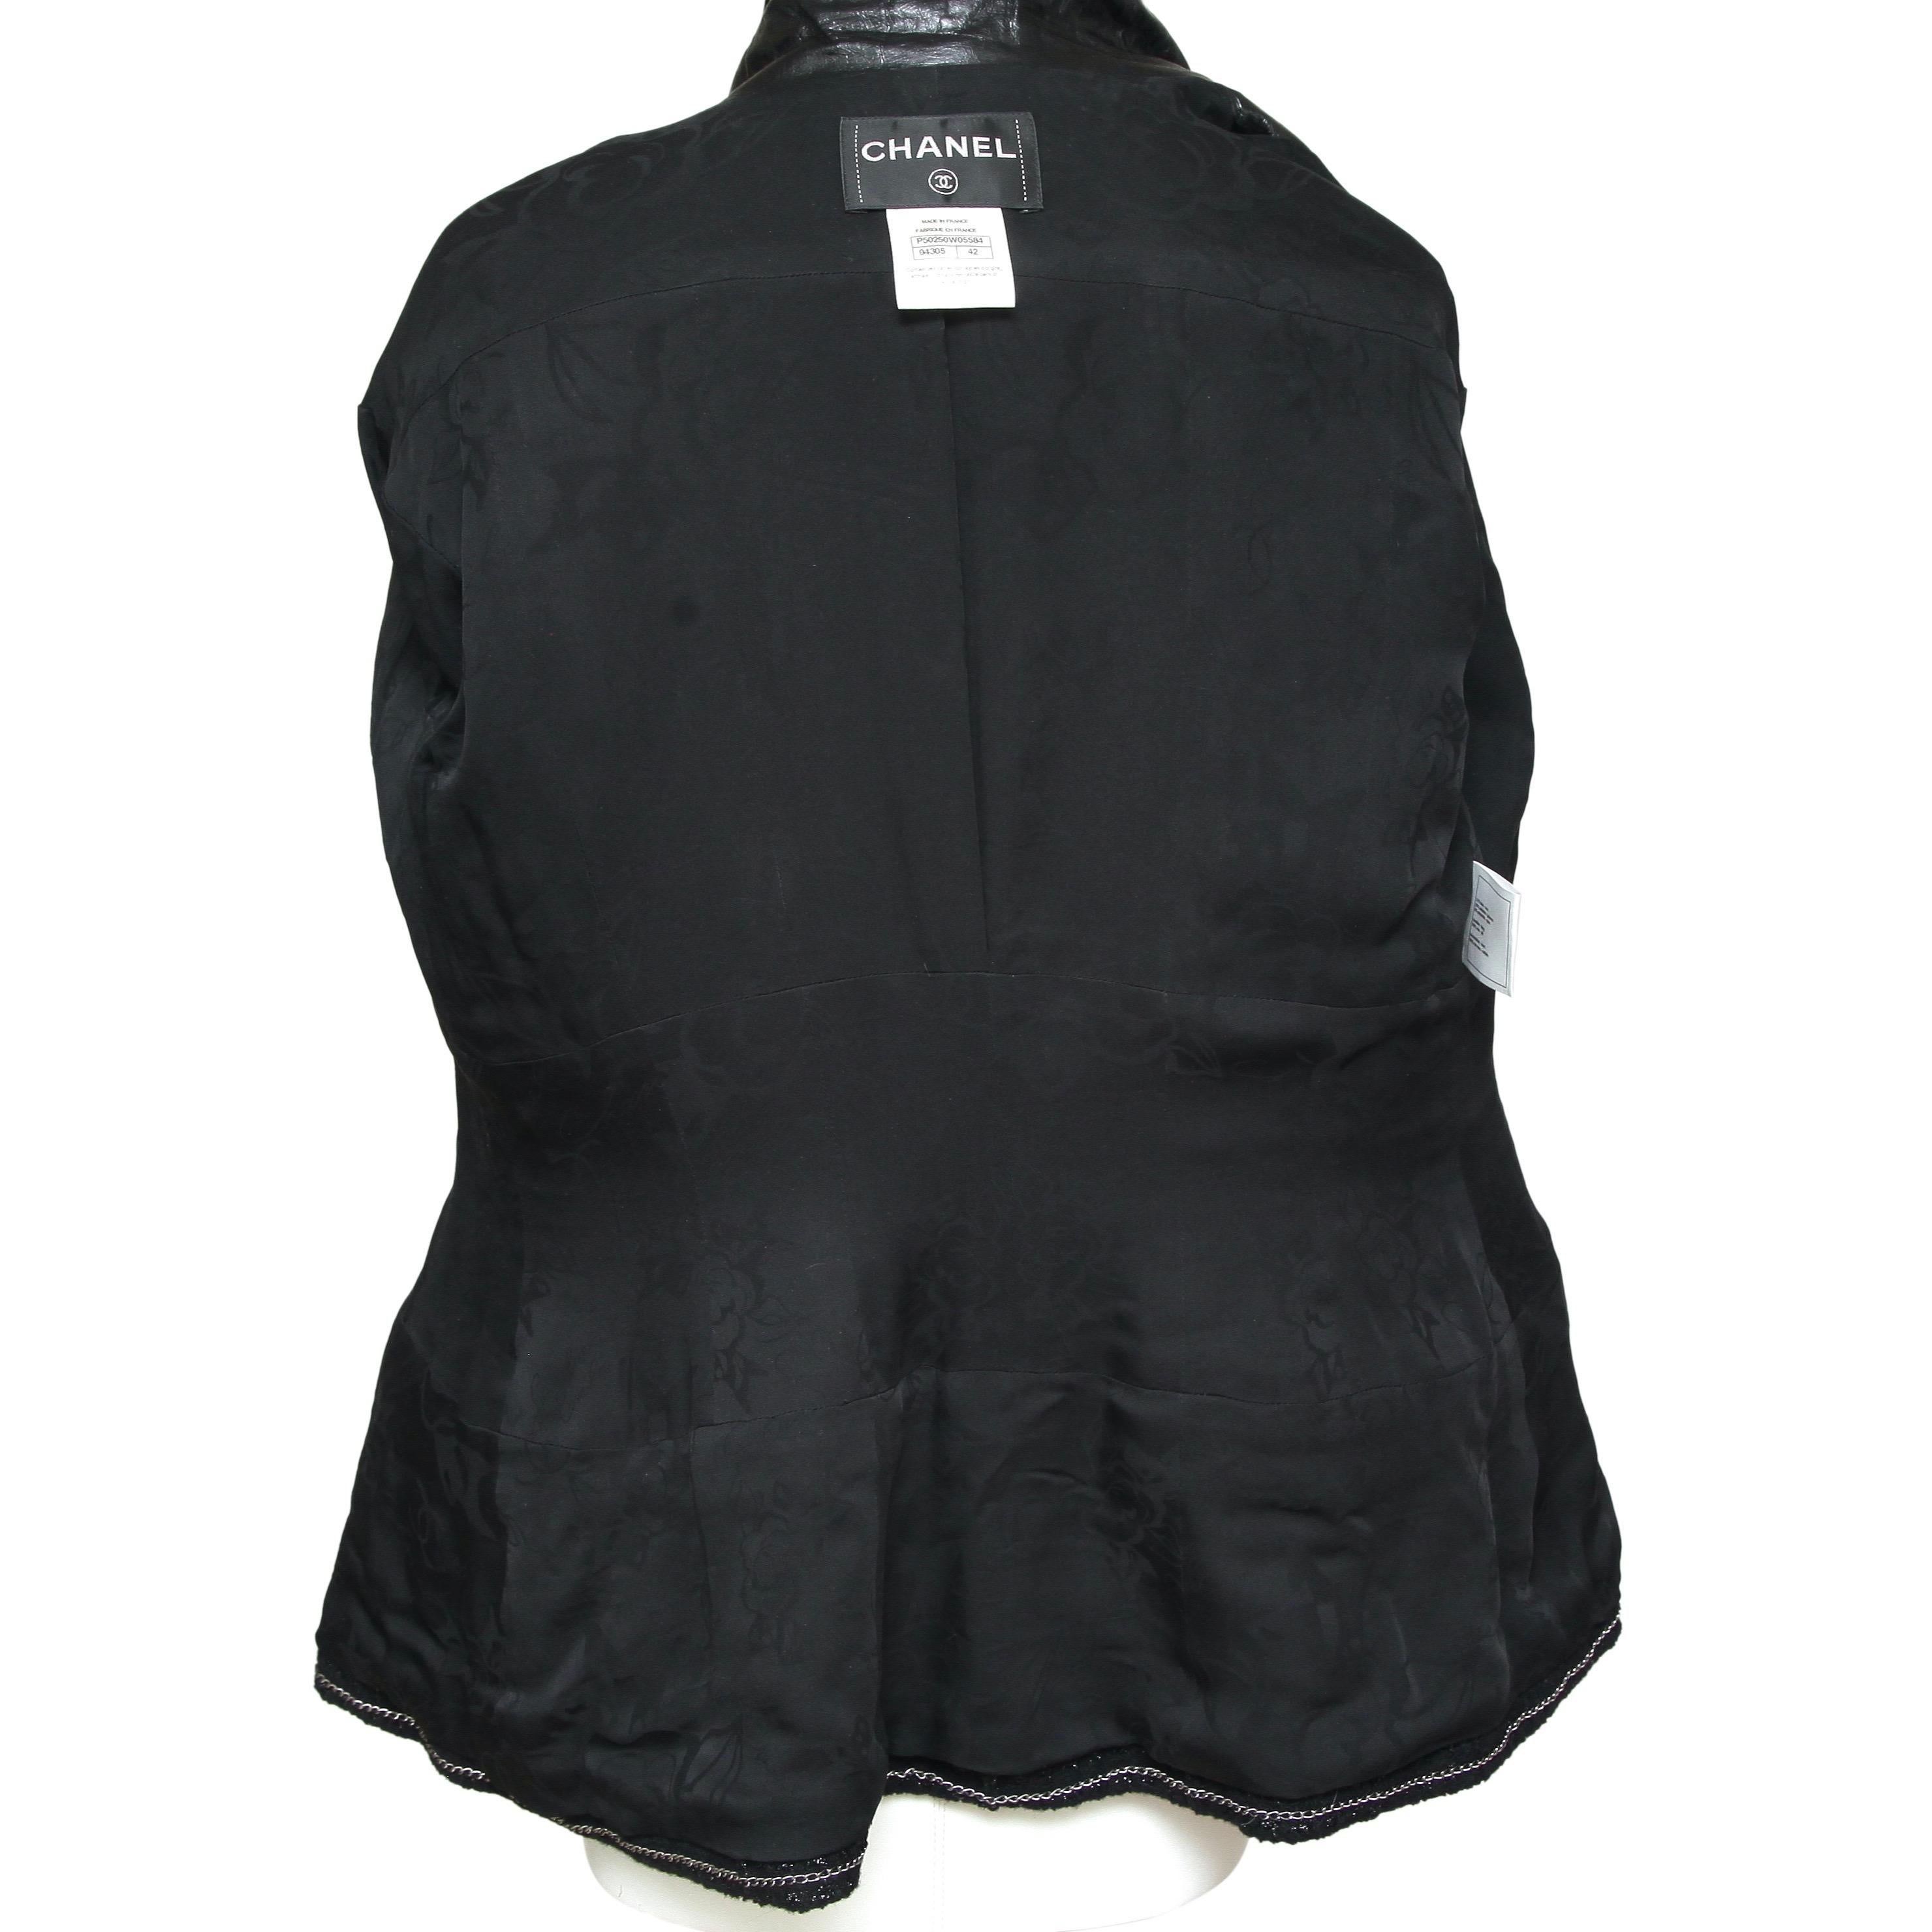 CHANEL Jacket Blazer Coat Tweed Black MetaIlic Leather Silver Chain Sz 42 2014 C For Sale 3